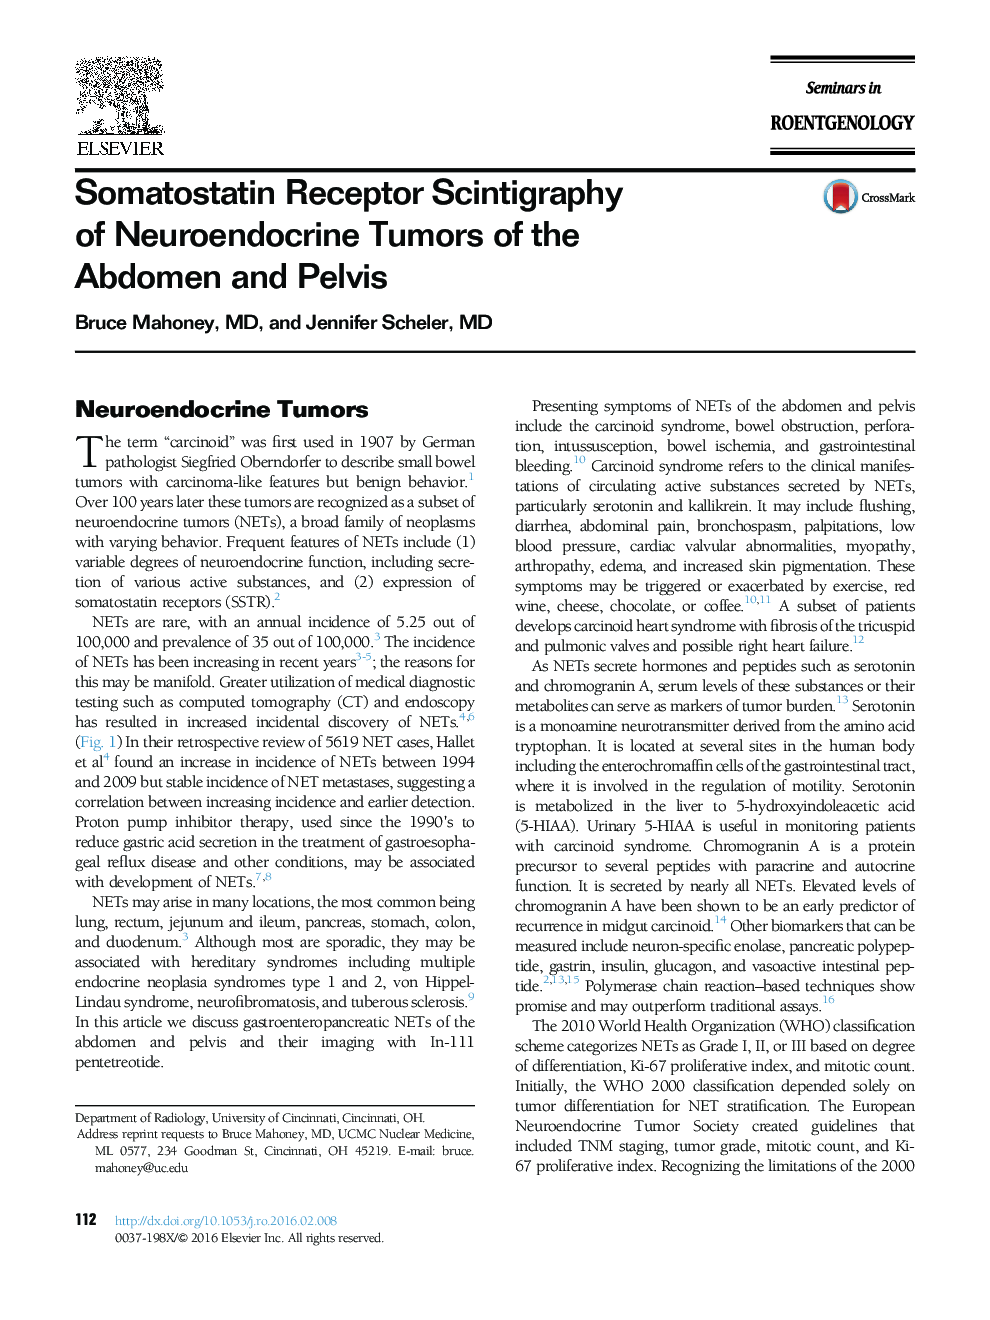 Somatostatin Receptor Scintigraphy of Neuroendocrine Tumors of the Abdomen and Pelvis